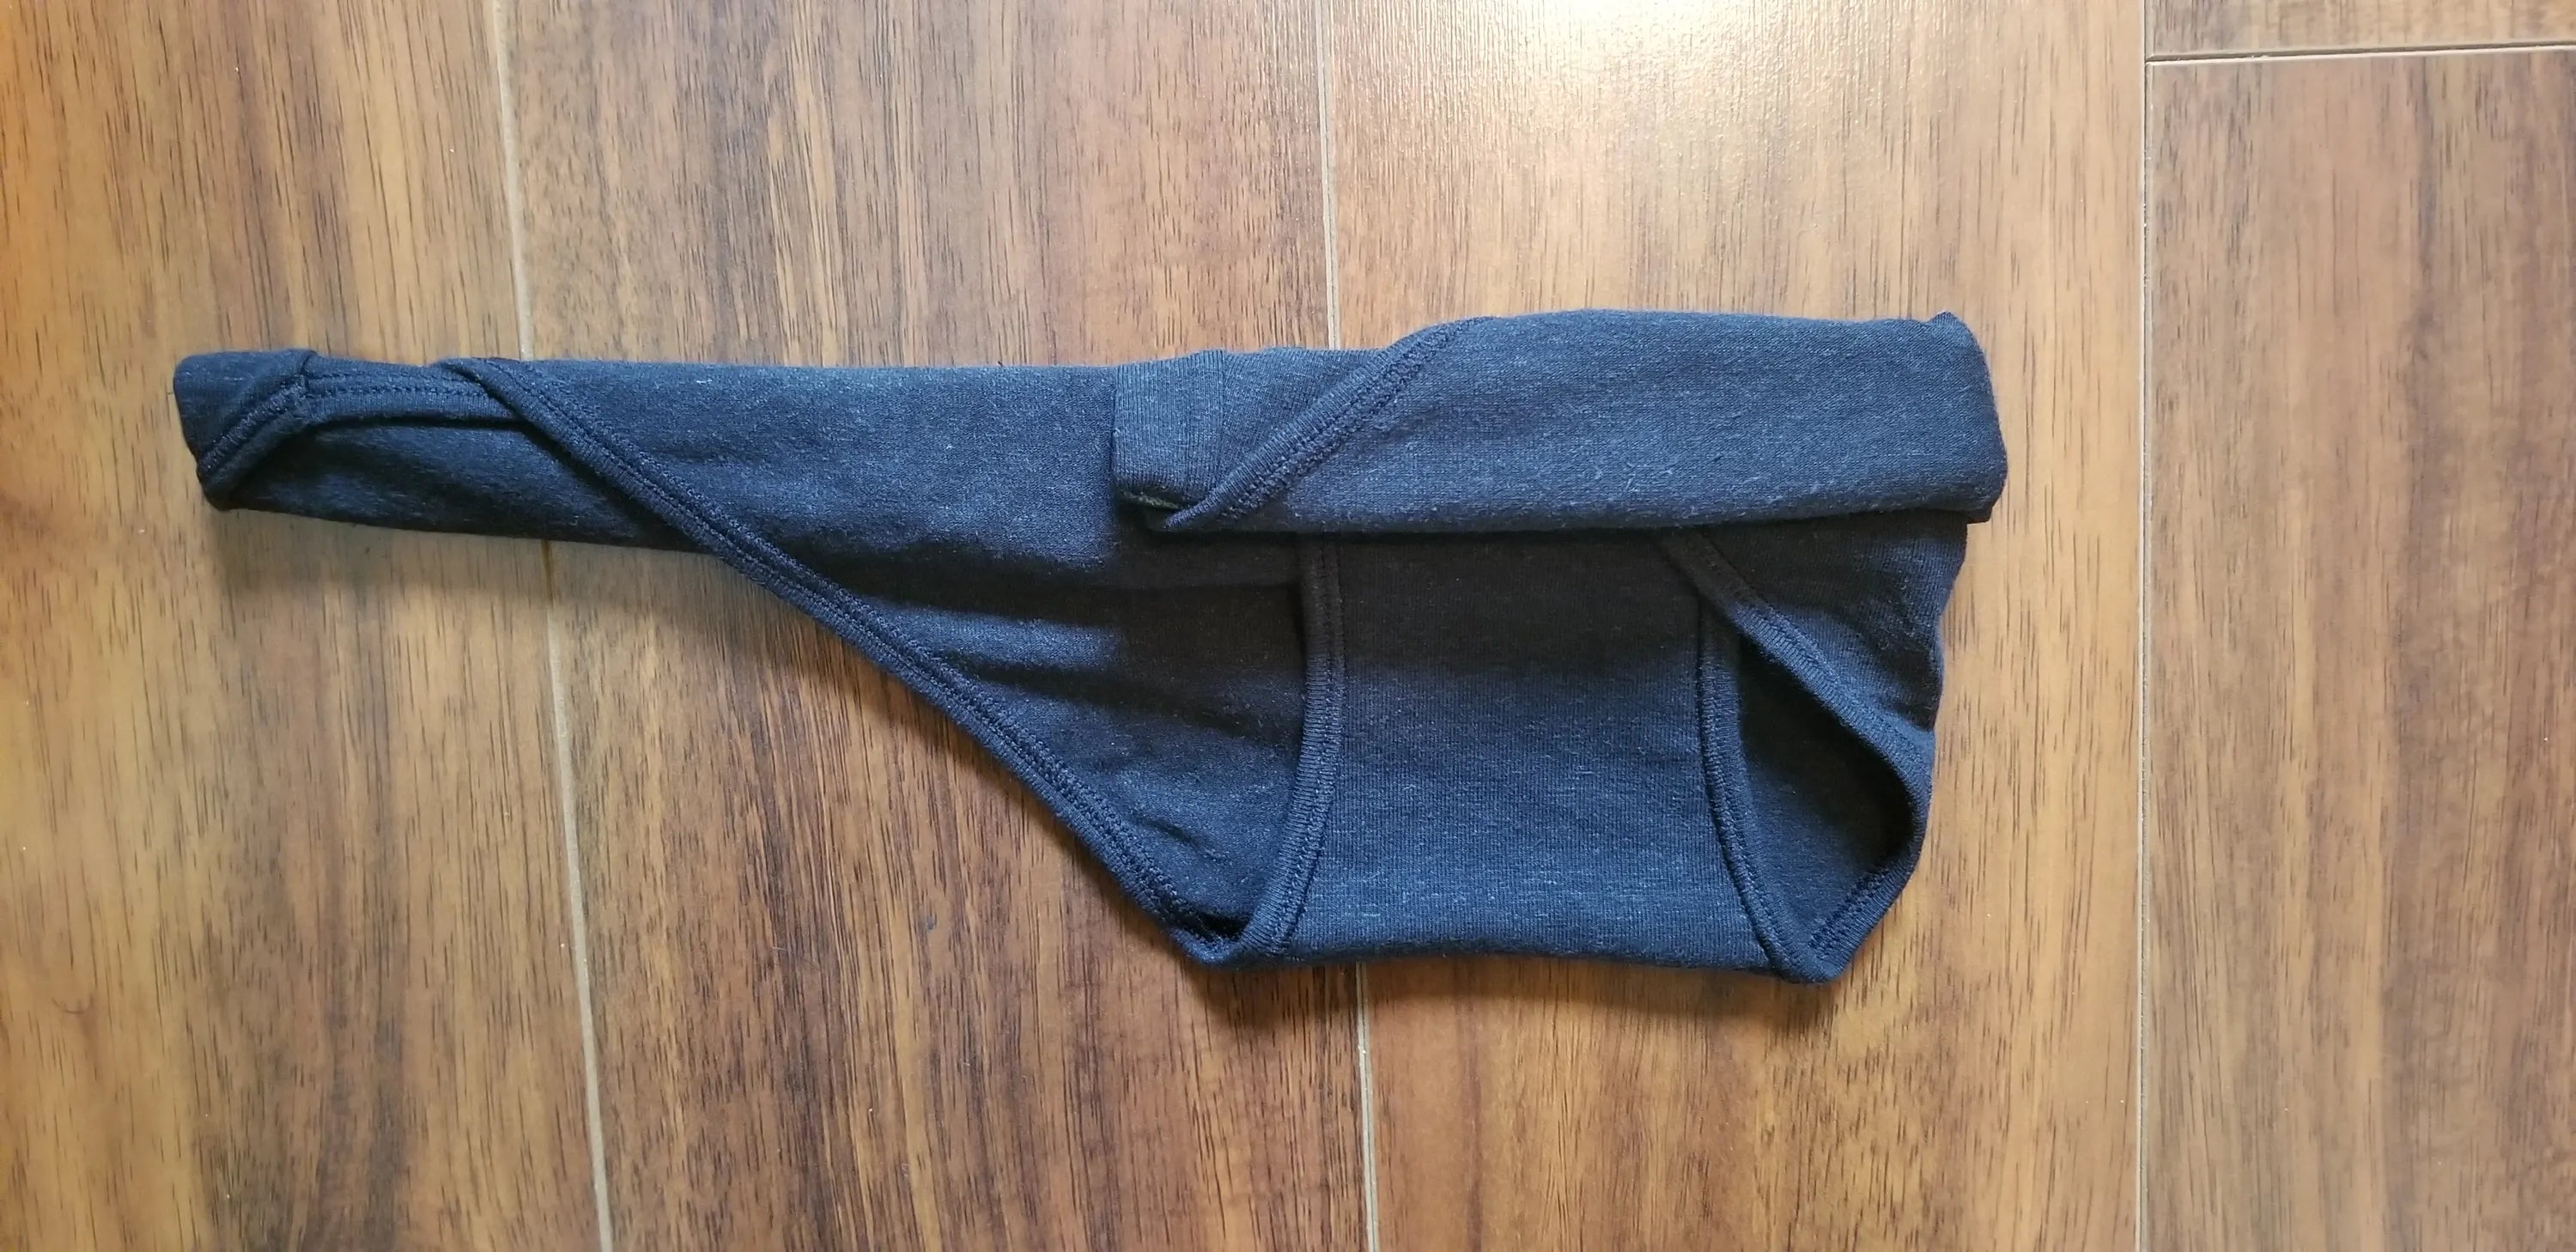 Simple tuck fold. Folding size 10 underwear from @bondsaus Storage